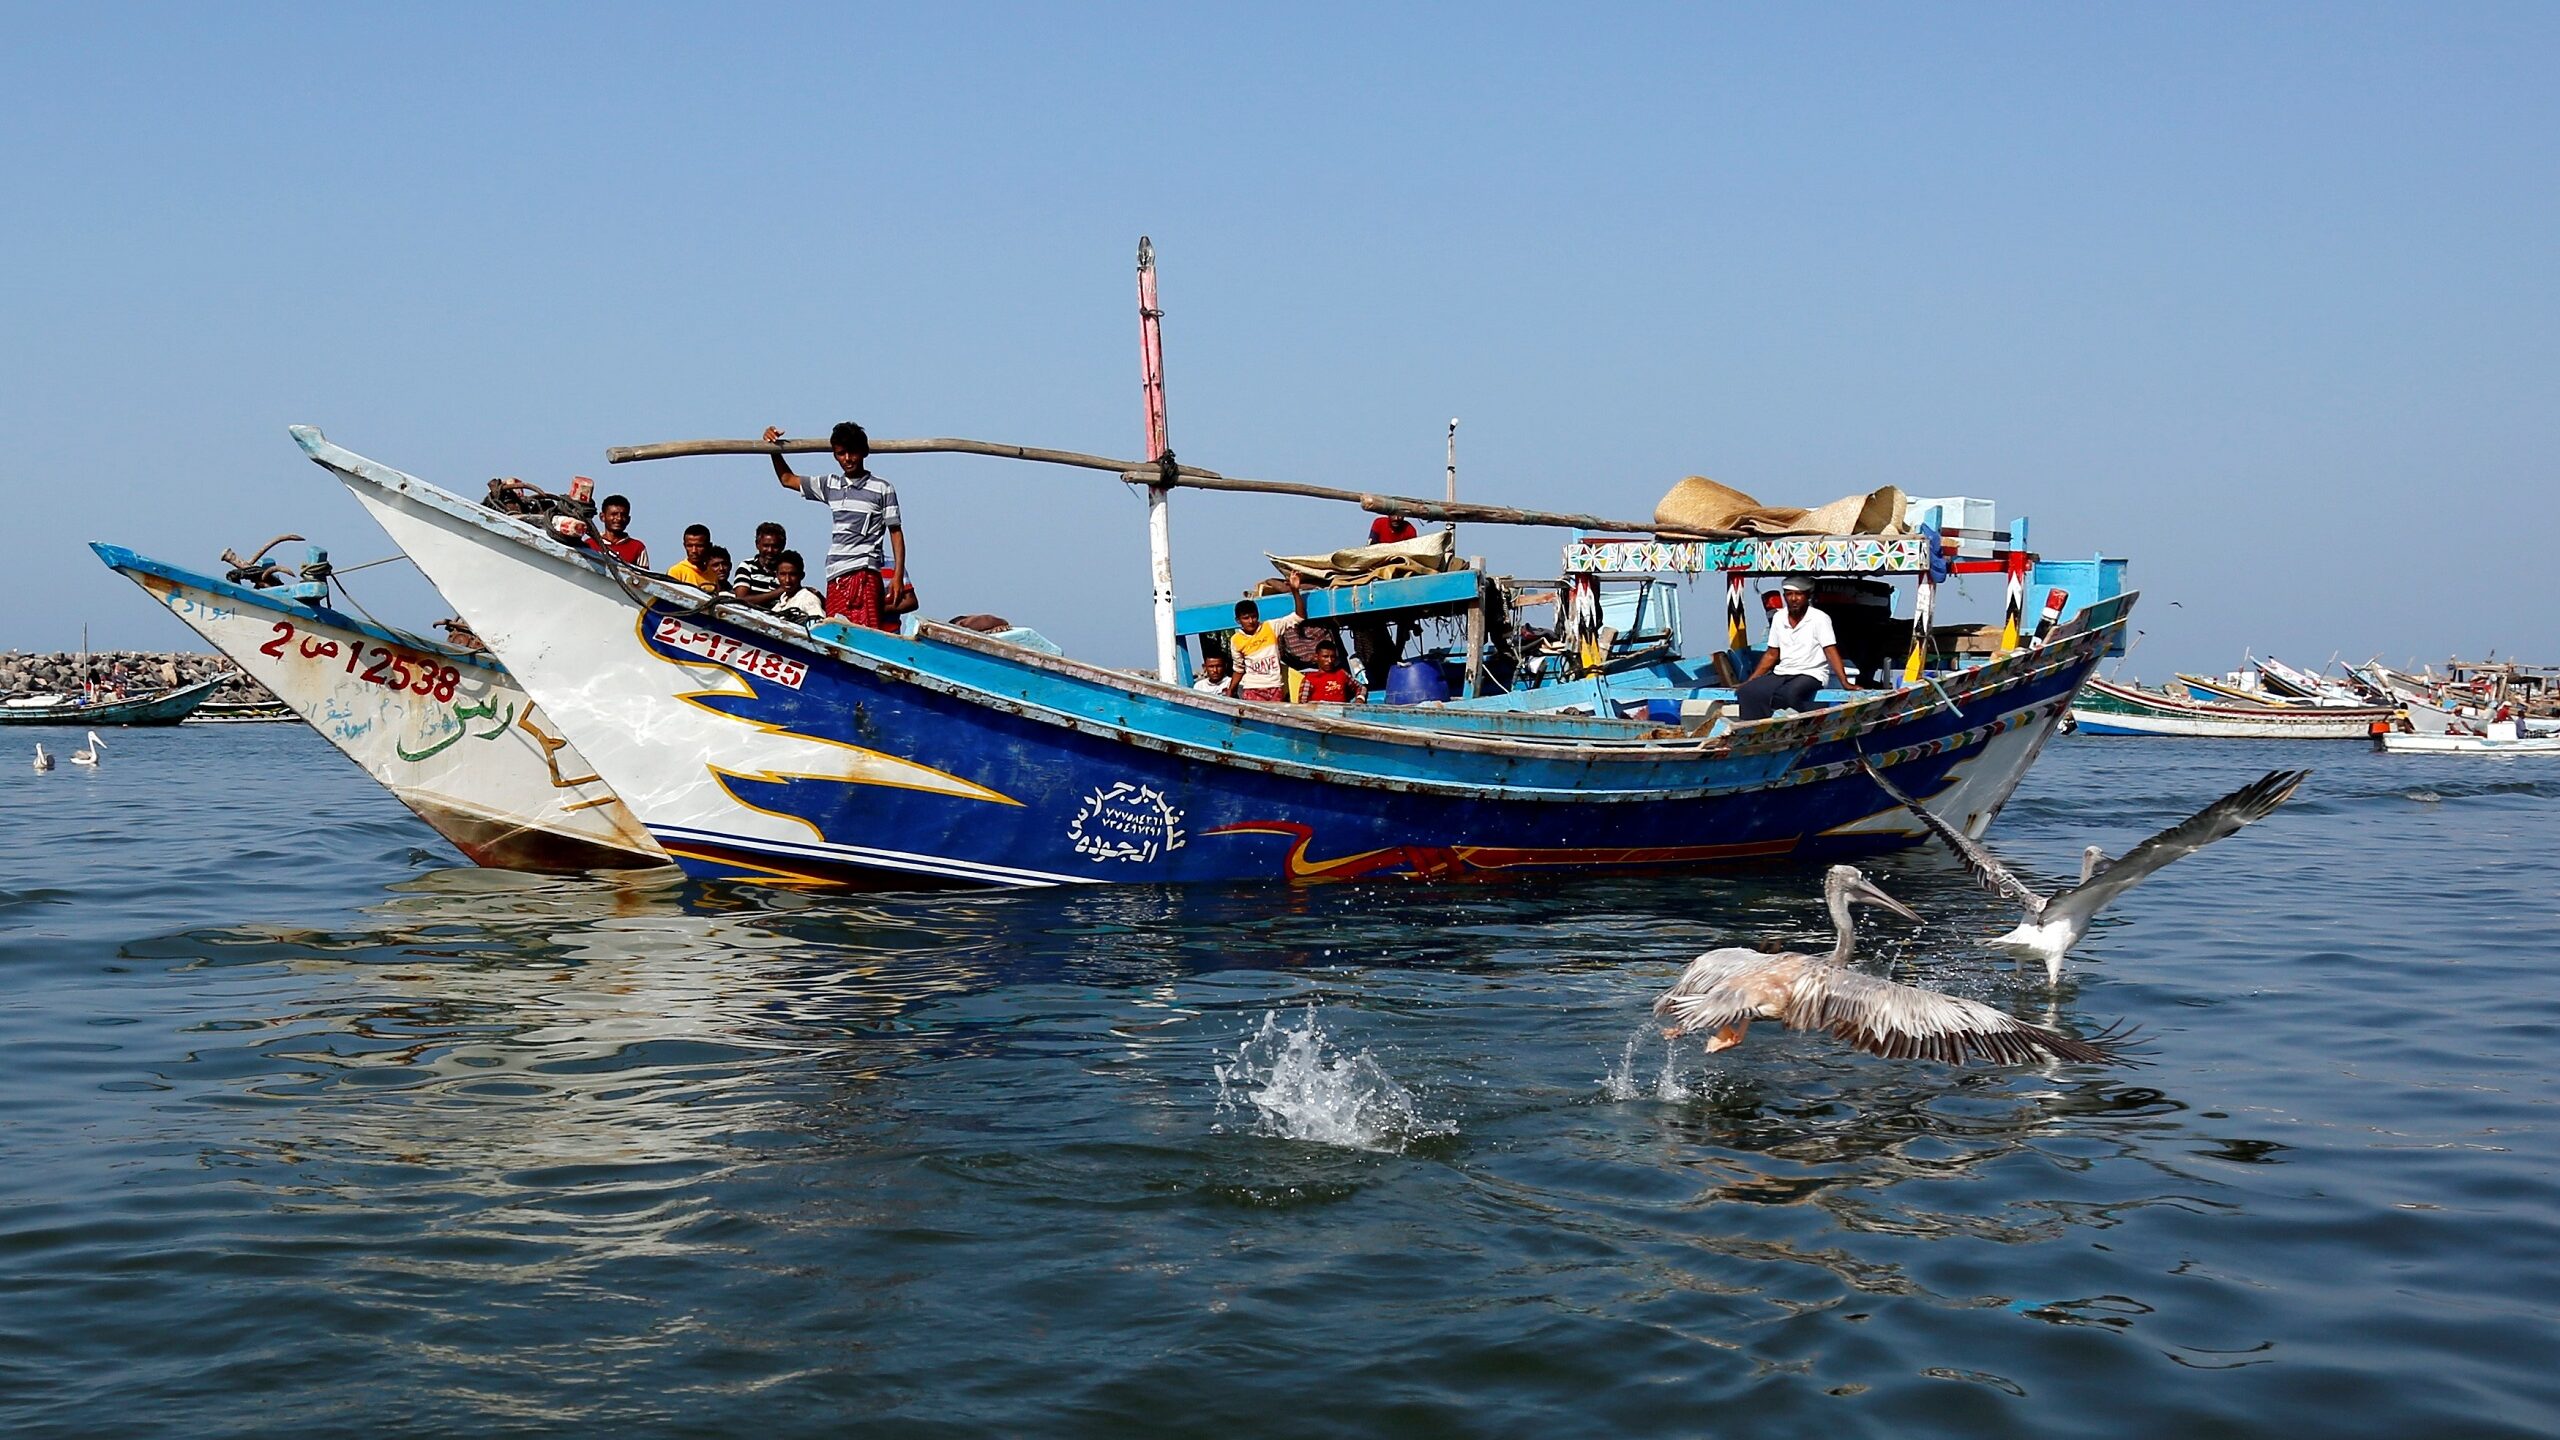 Boat Accident in Yemen’s Red Sea Kills 21, Mostly Women, Children